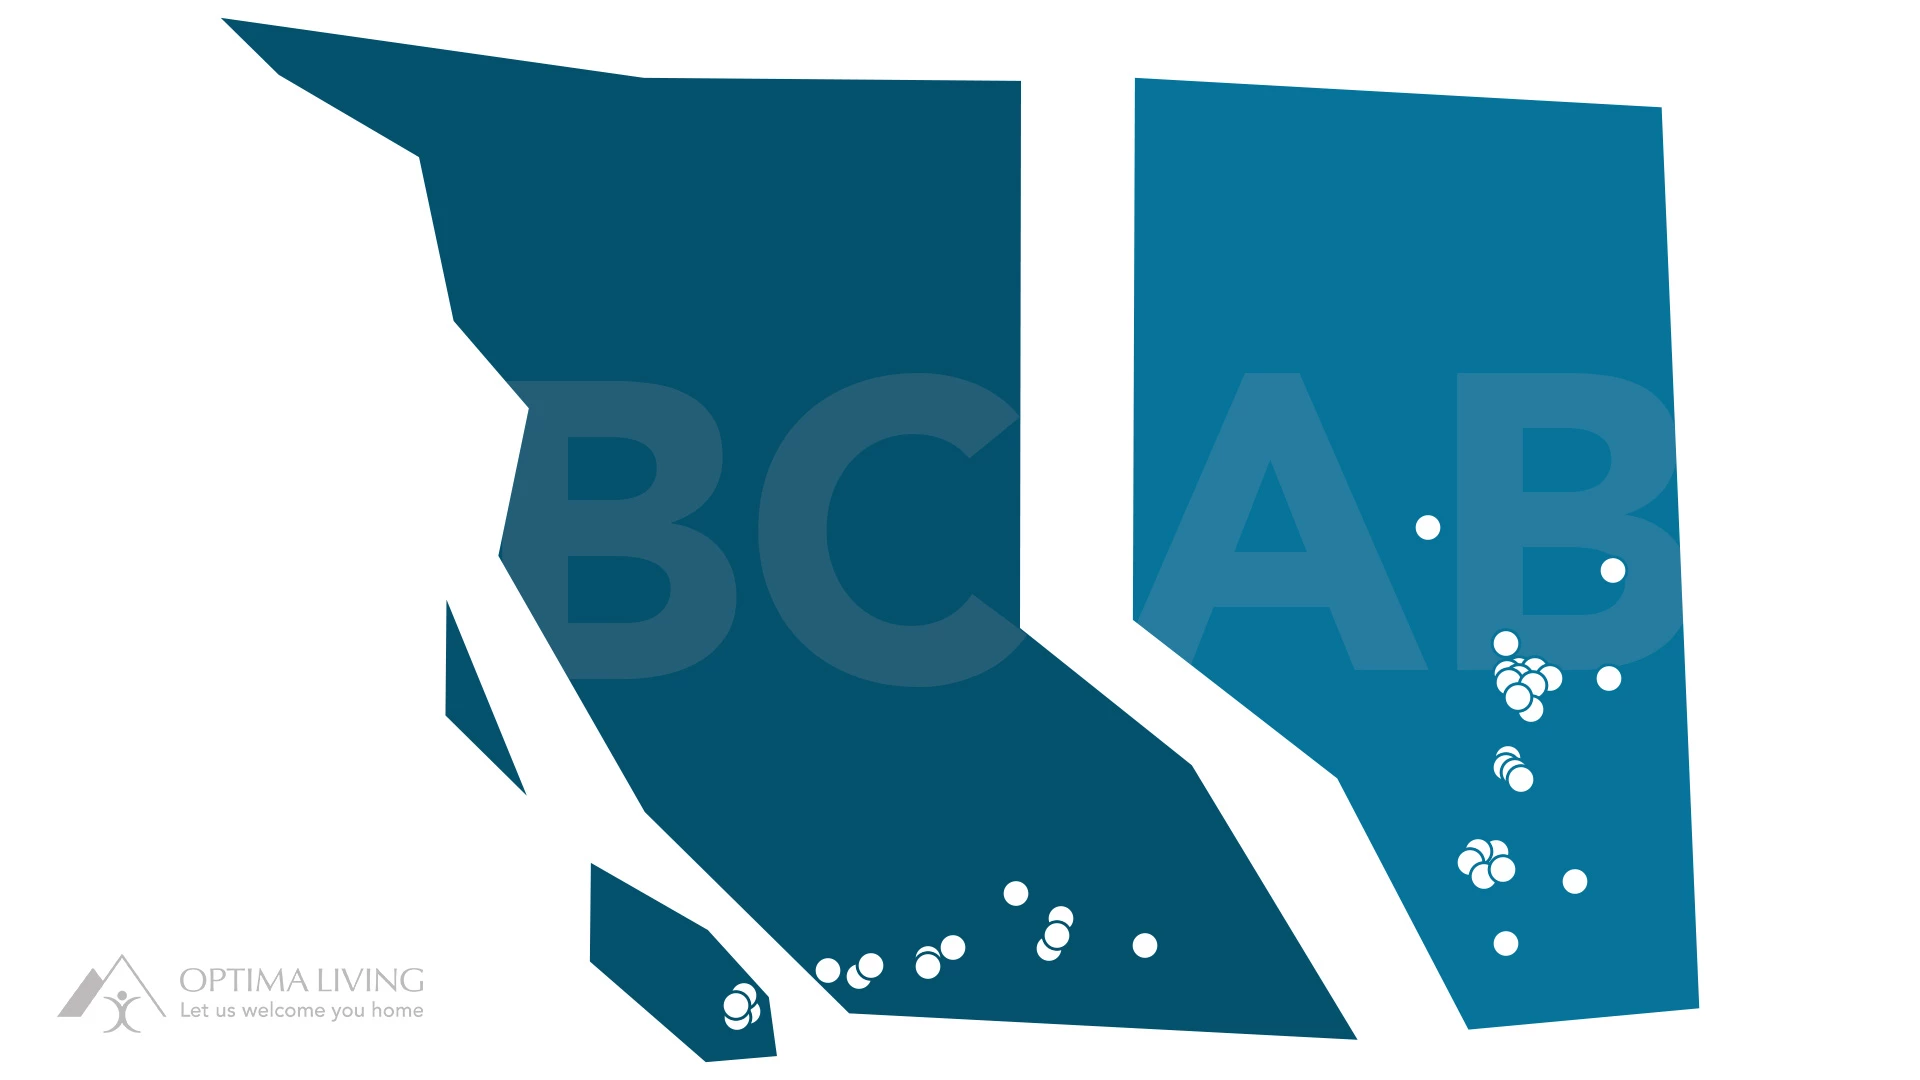 Alberta and British Columbia Provinces showing optima living community locations